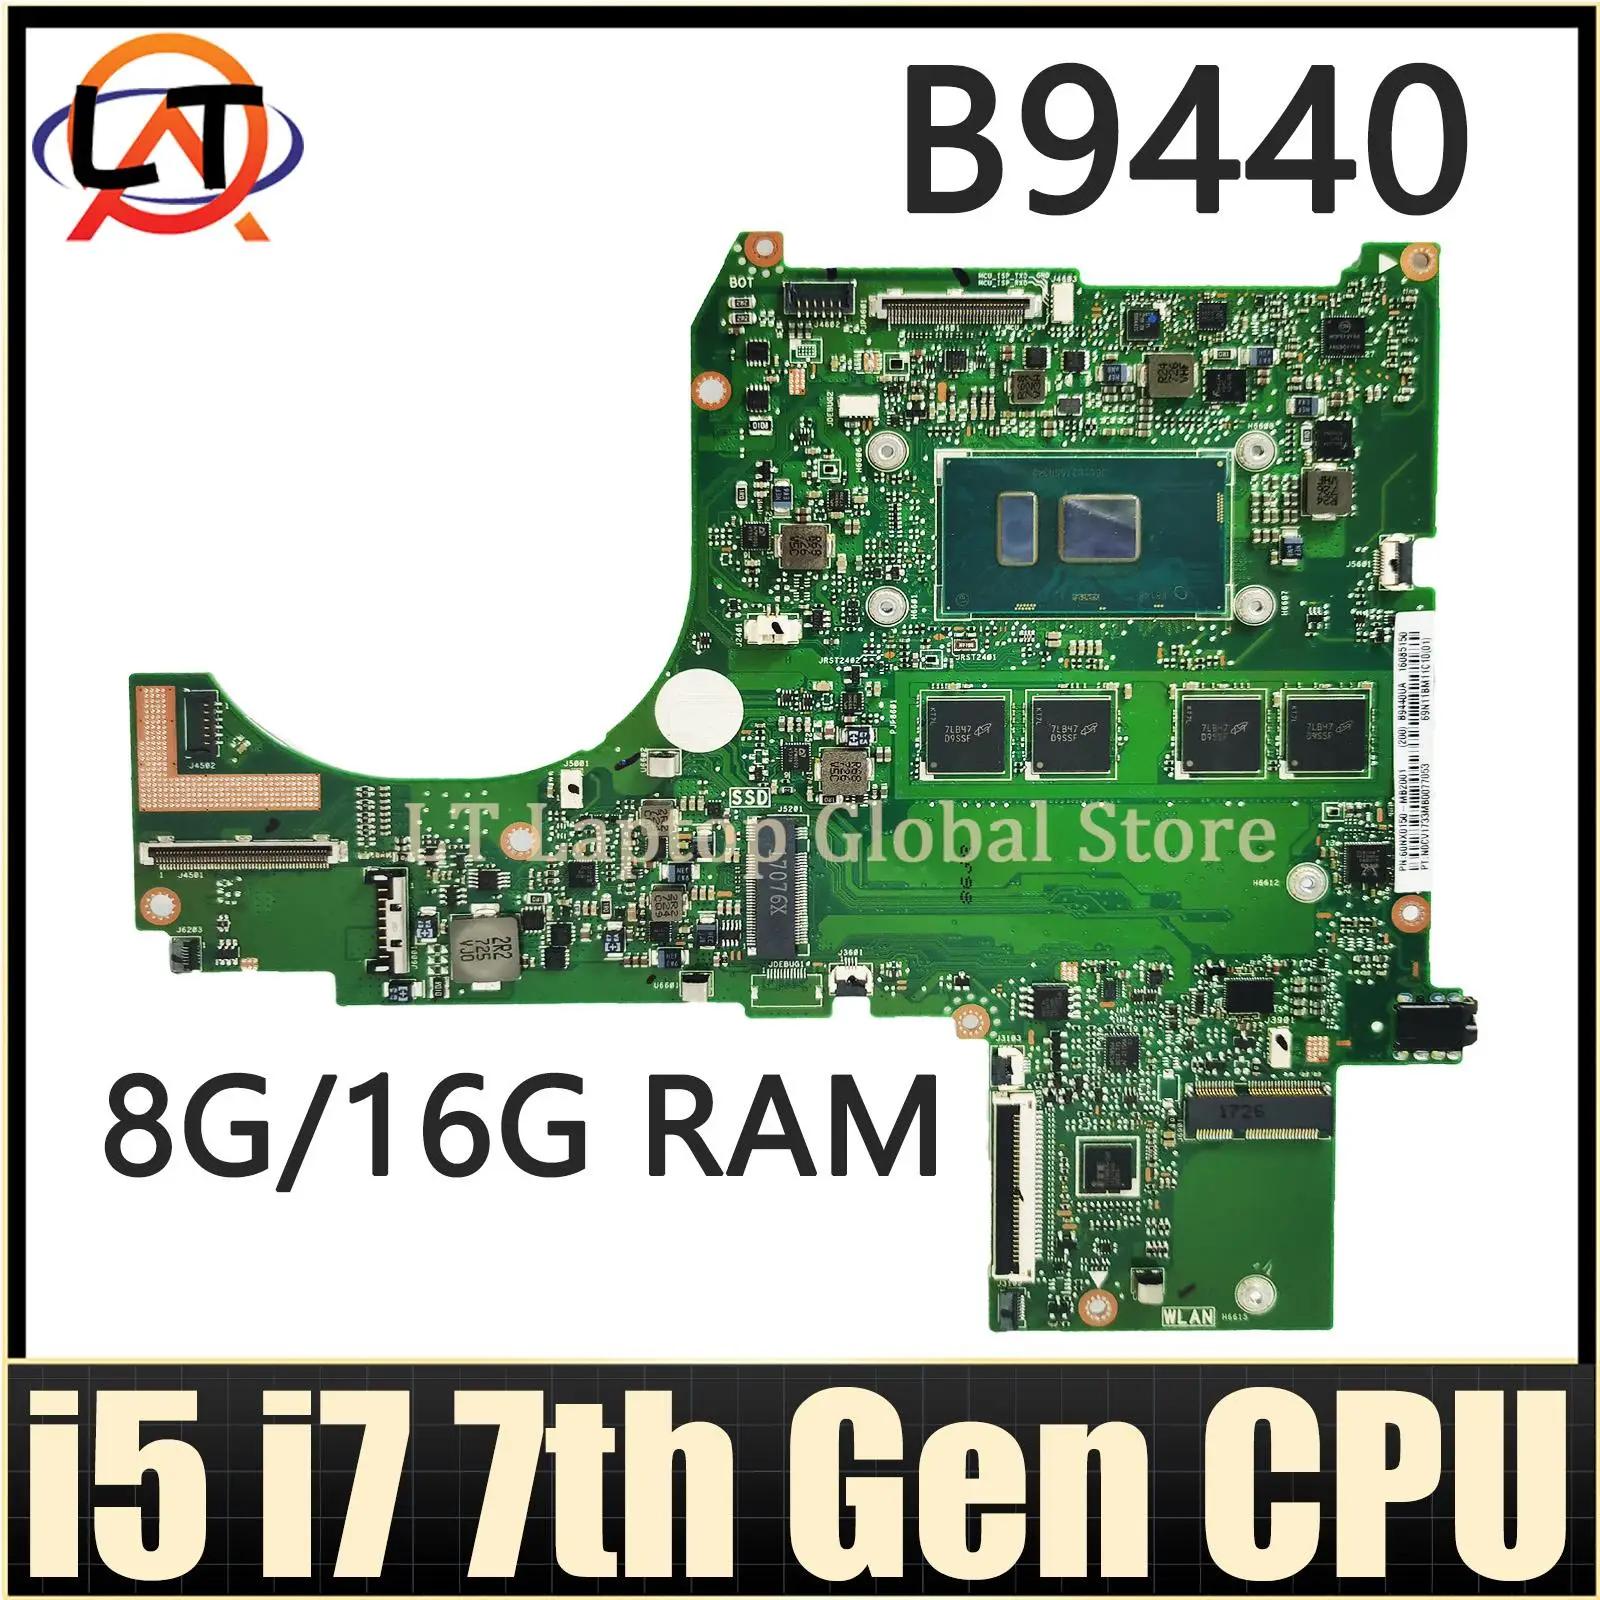 ASUS Ʈ , B9440UA, B9440, B9440FA, B9440UAR, B9440UAV, B9440UAM, I5, I7, 7  CPU, 8GB, 16GB RAM